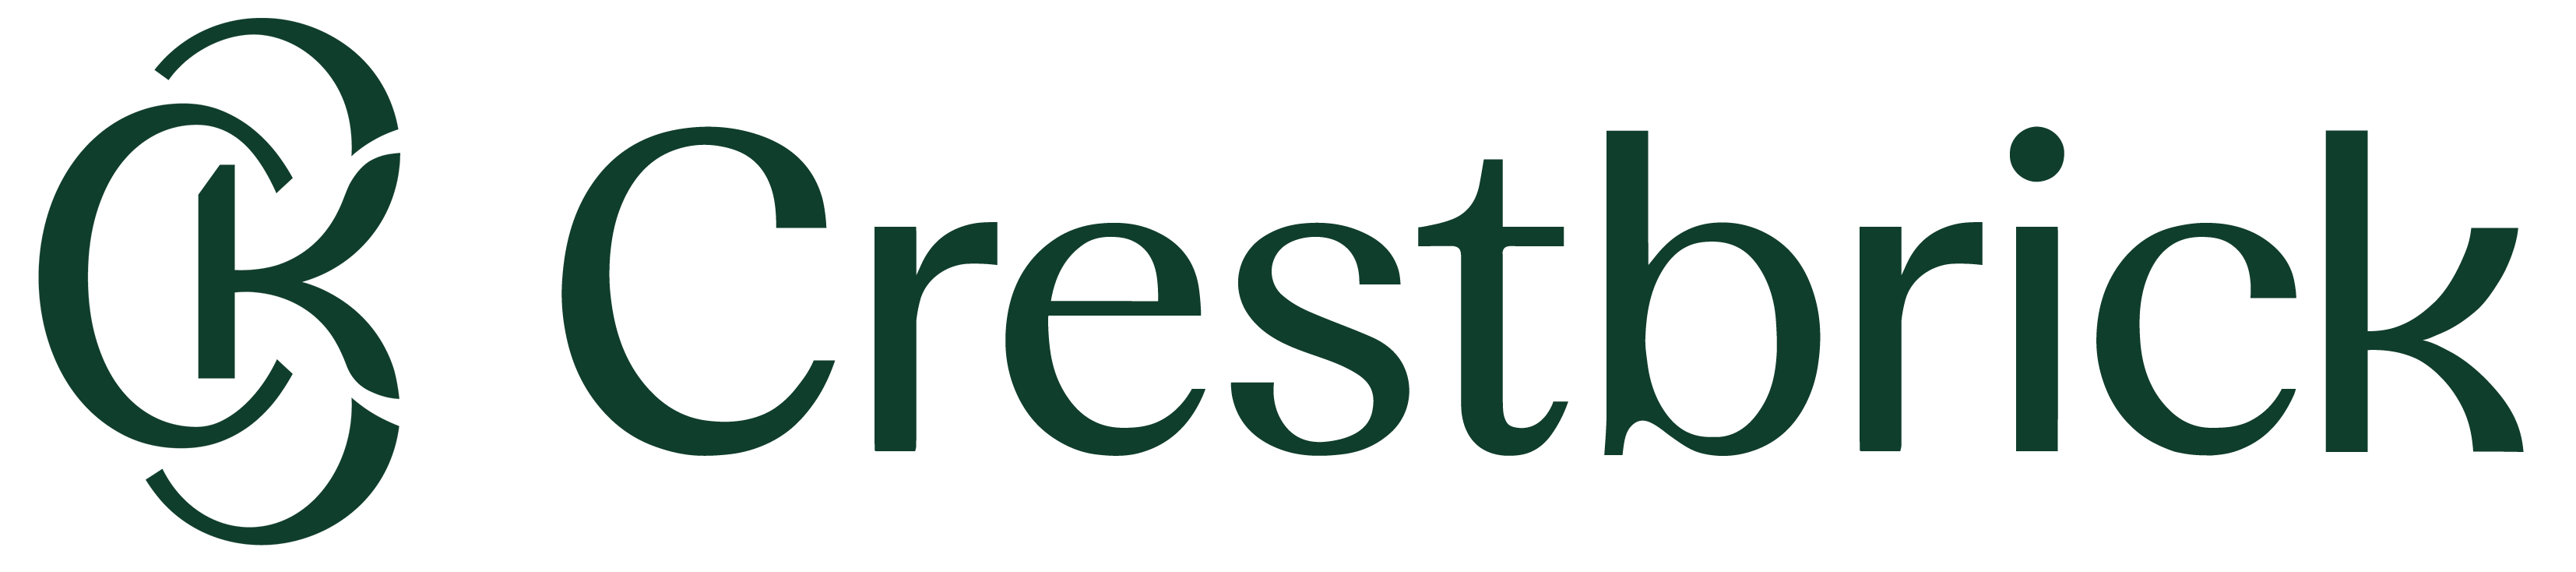 Crestbrick's Brand Logo